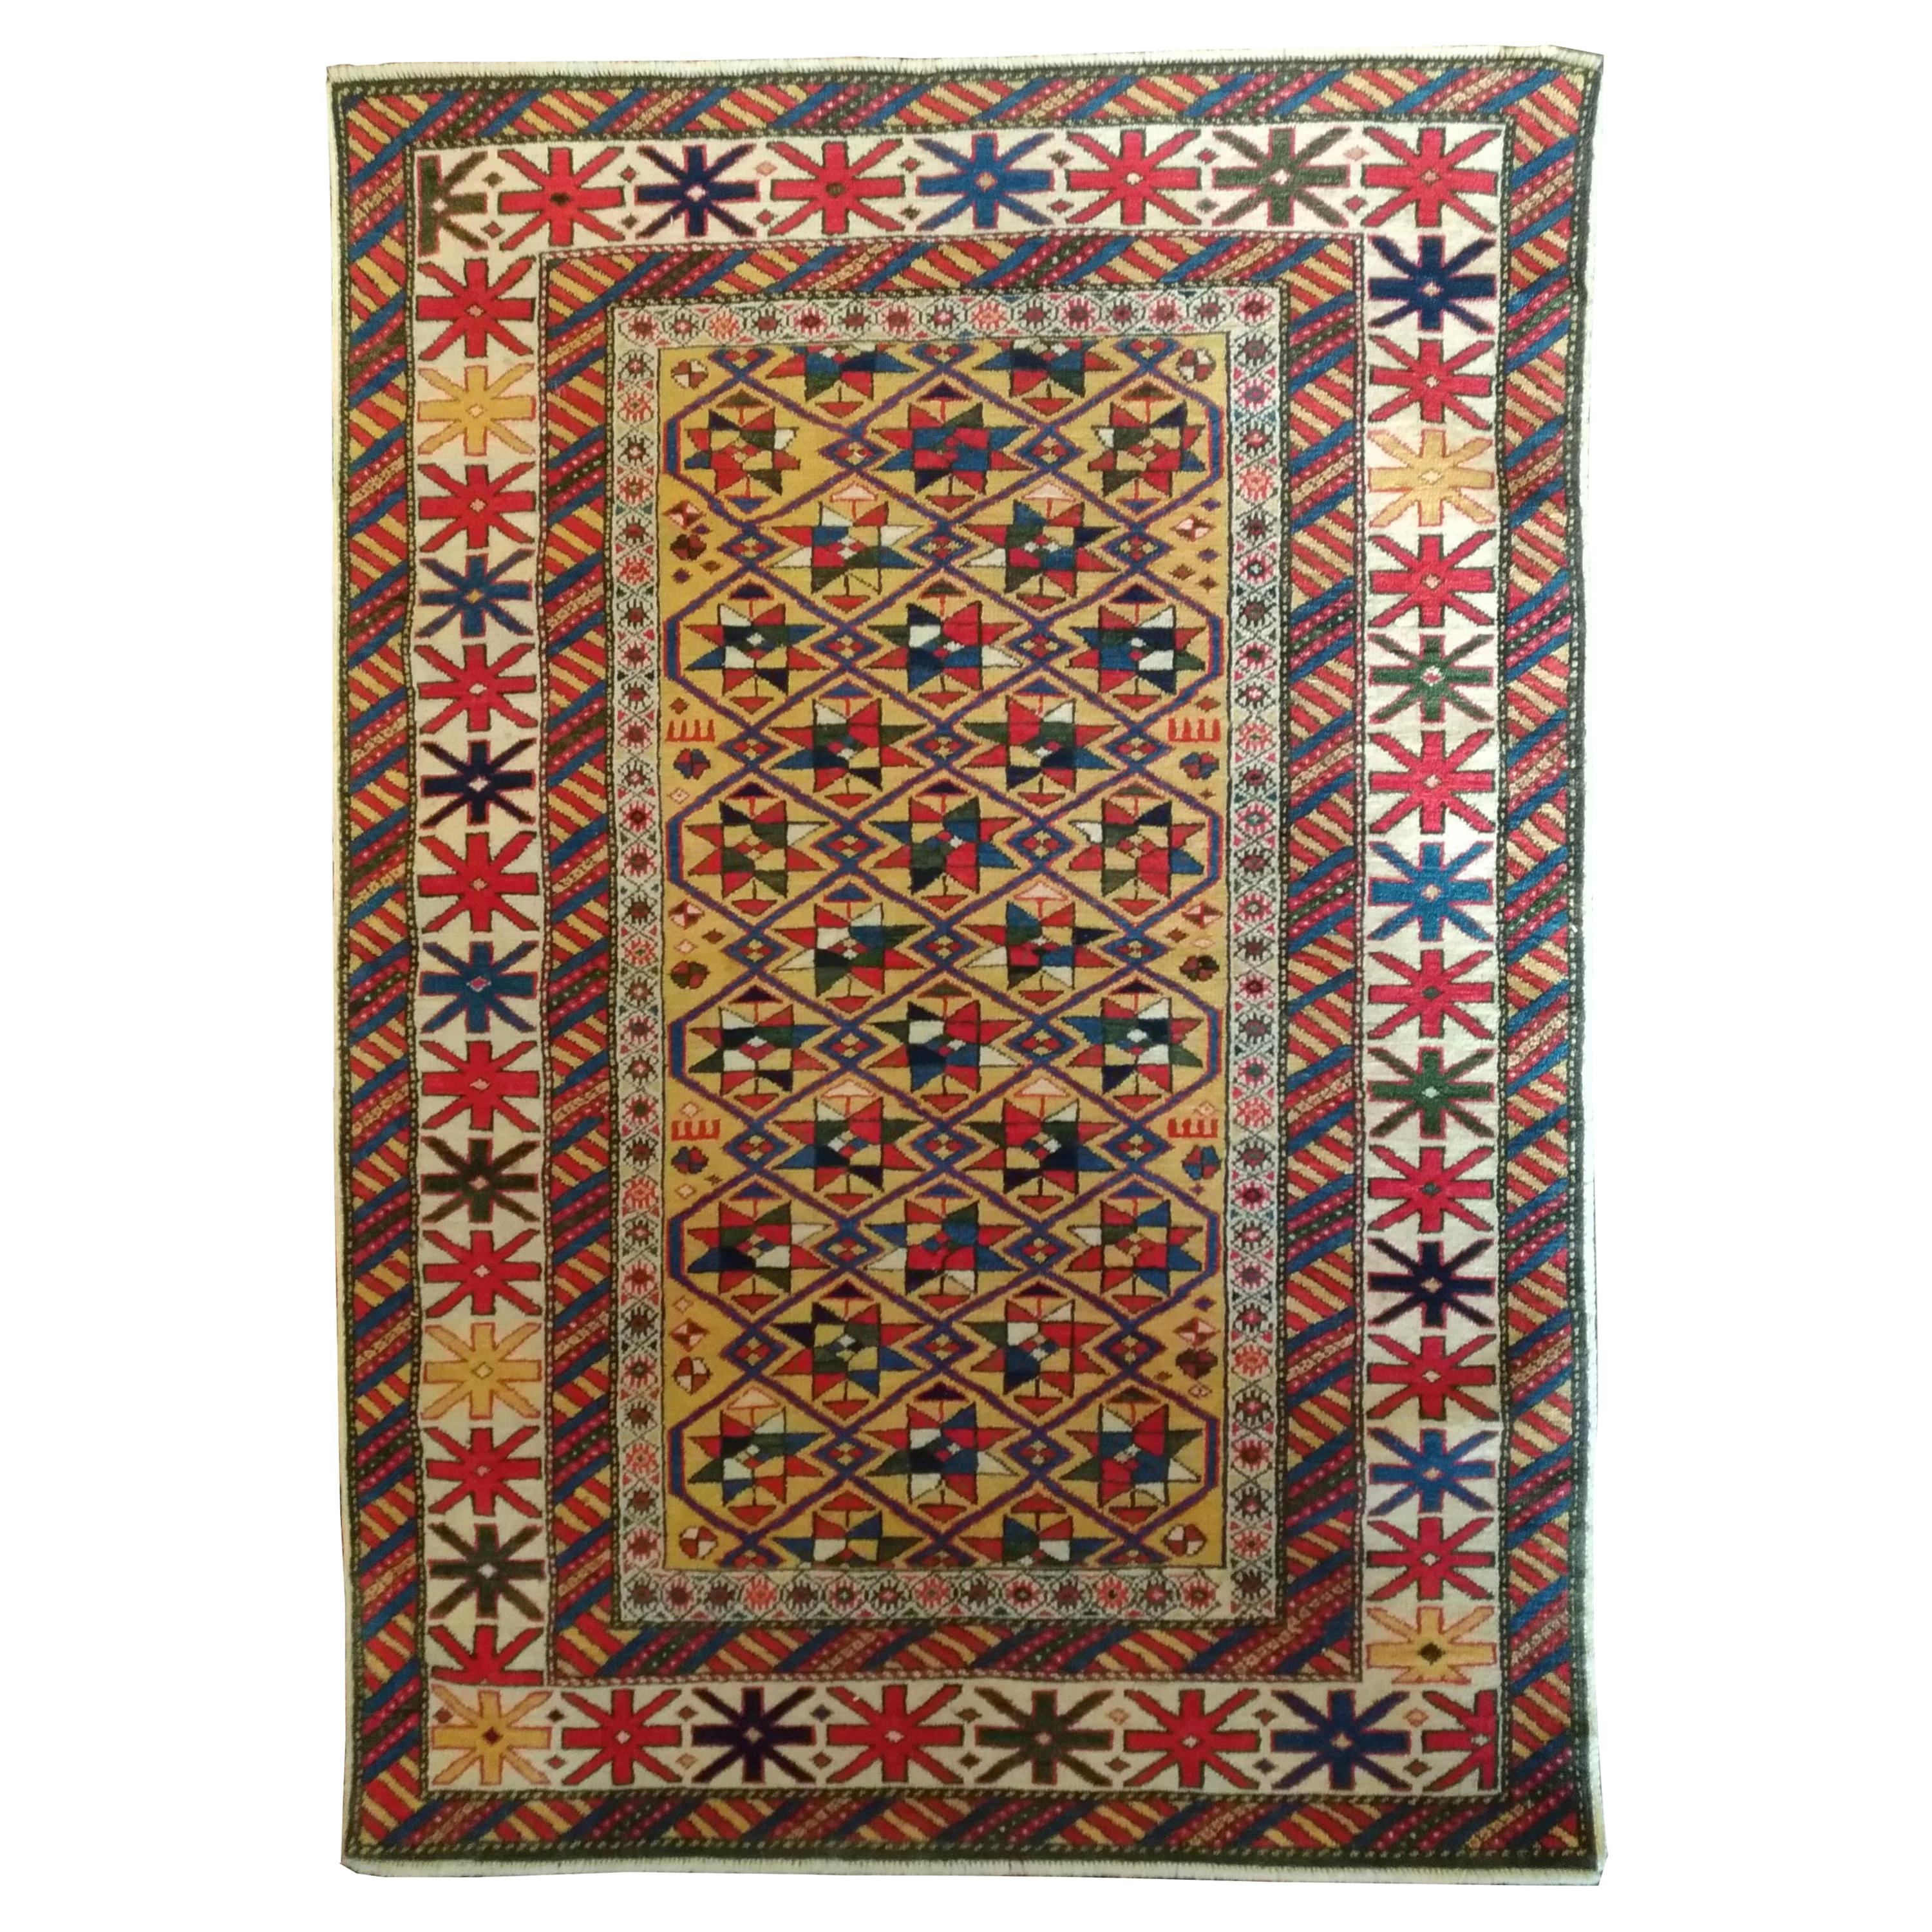 975 - 19th Century Caucasian Talish Rug For Sale